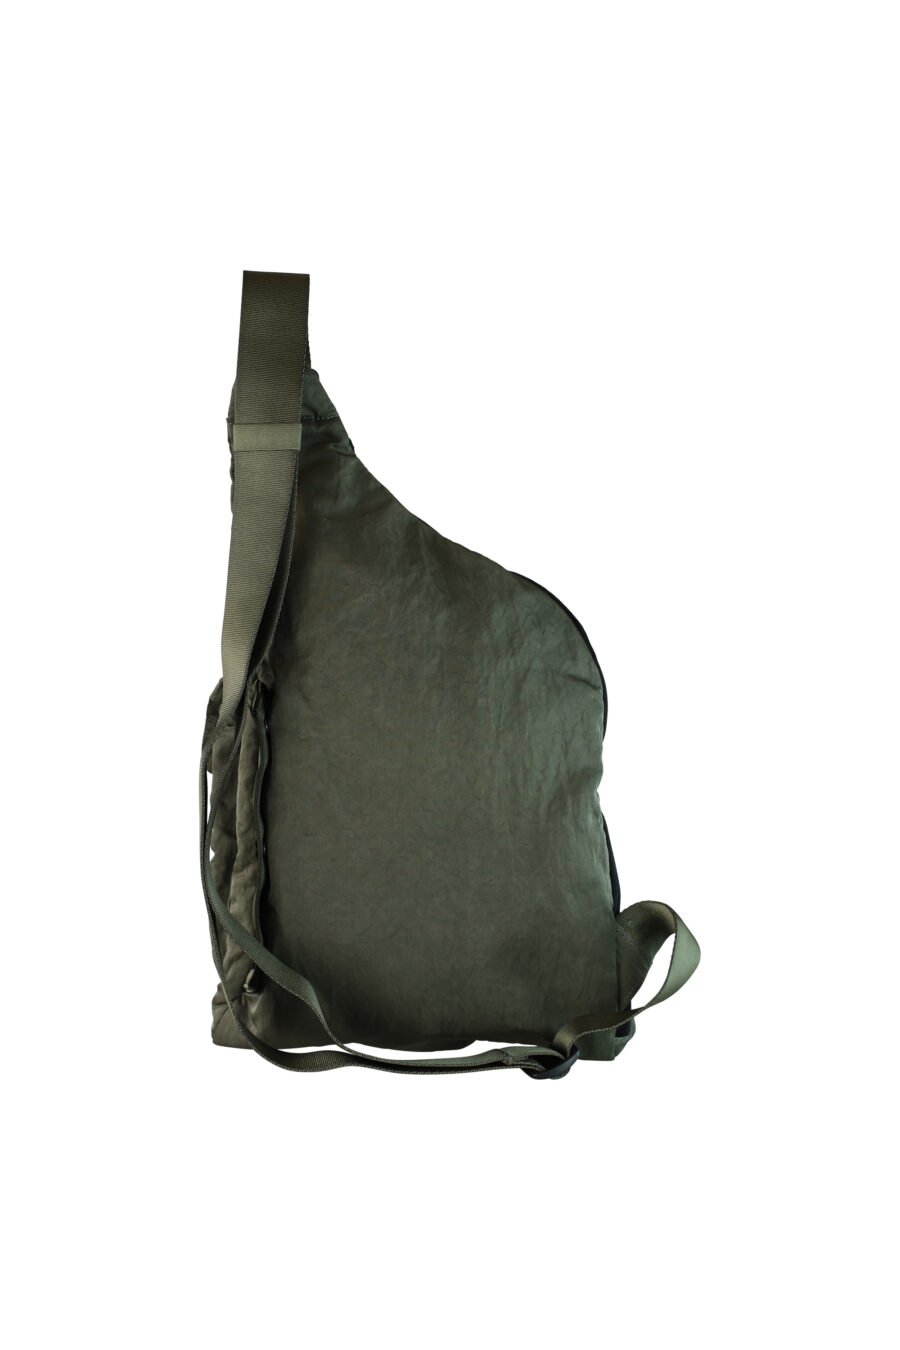 Green crossbody bag with pockets and circular mini logo - IMG 0425